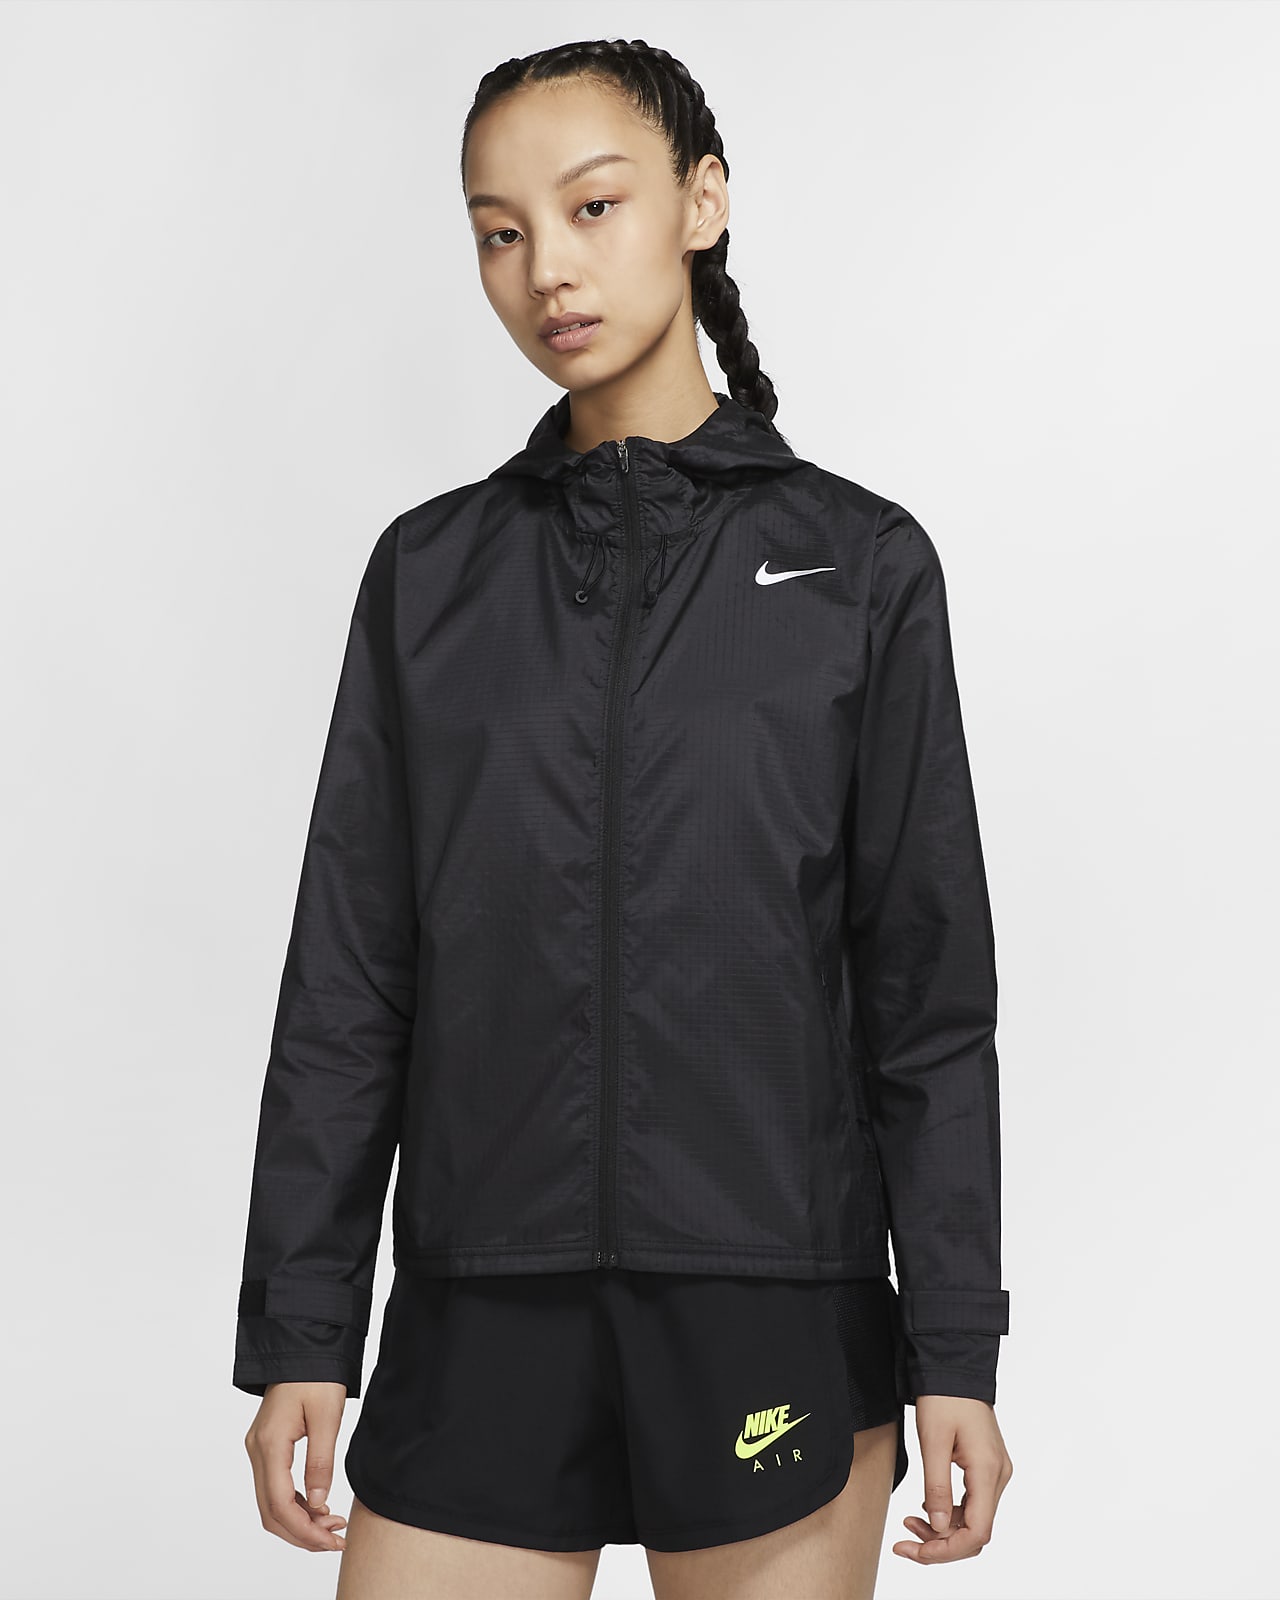 Proberen Terugbetaling twist Nike Essential Women's Running Jacket. Nike JP